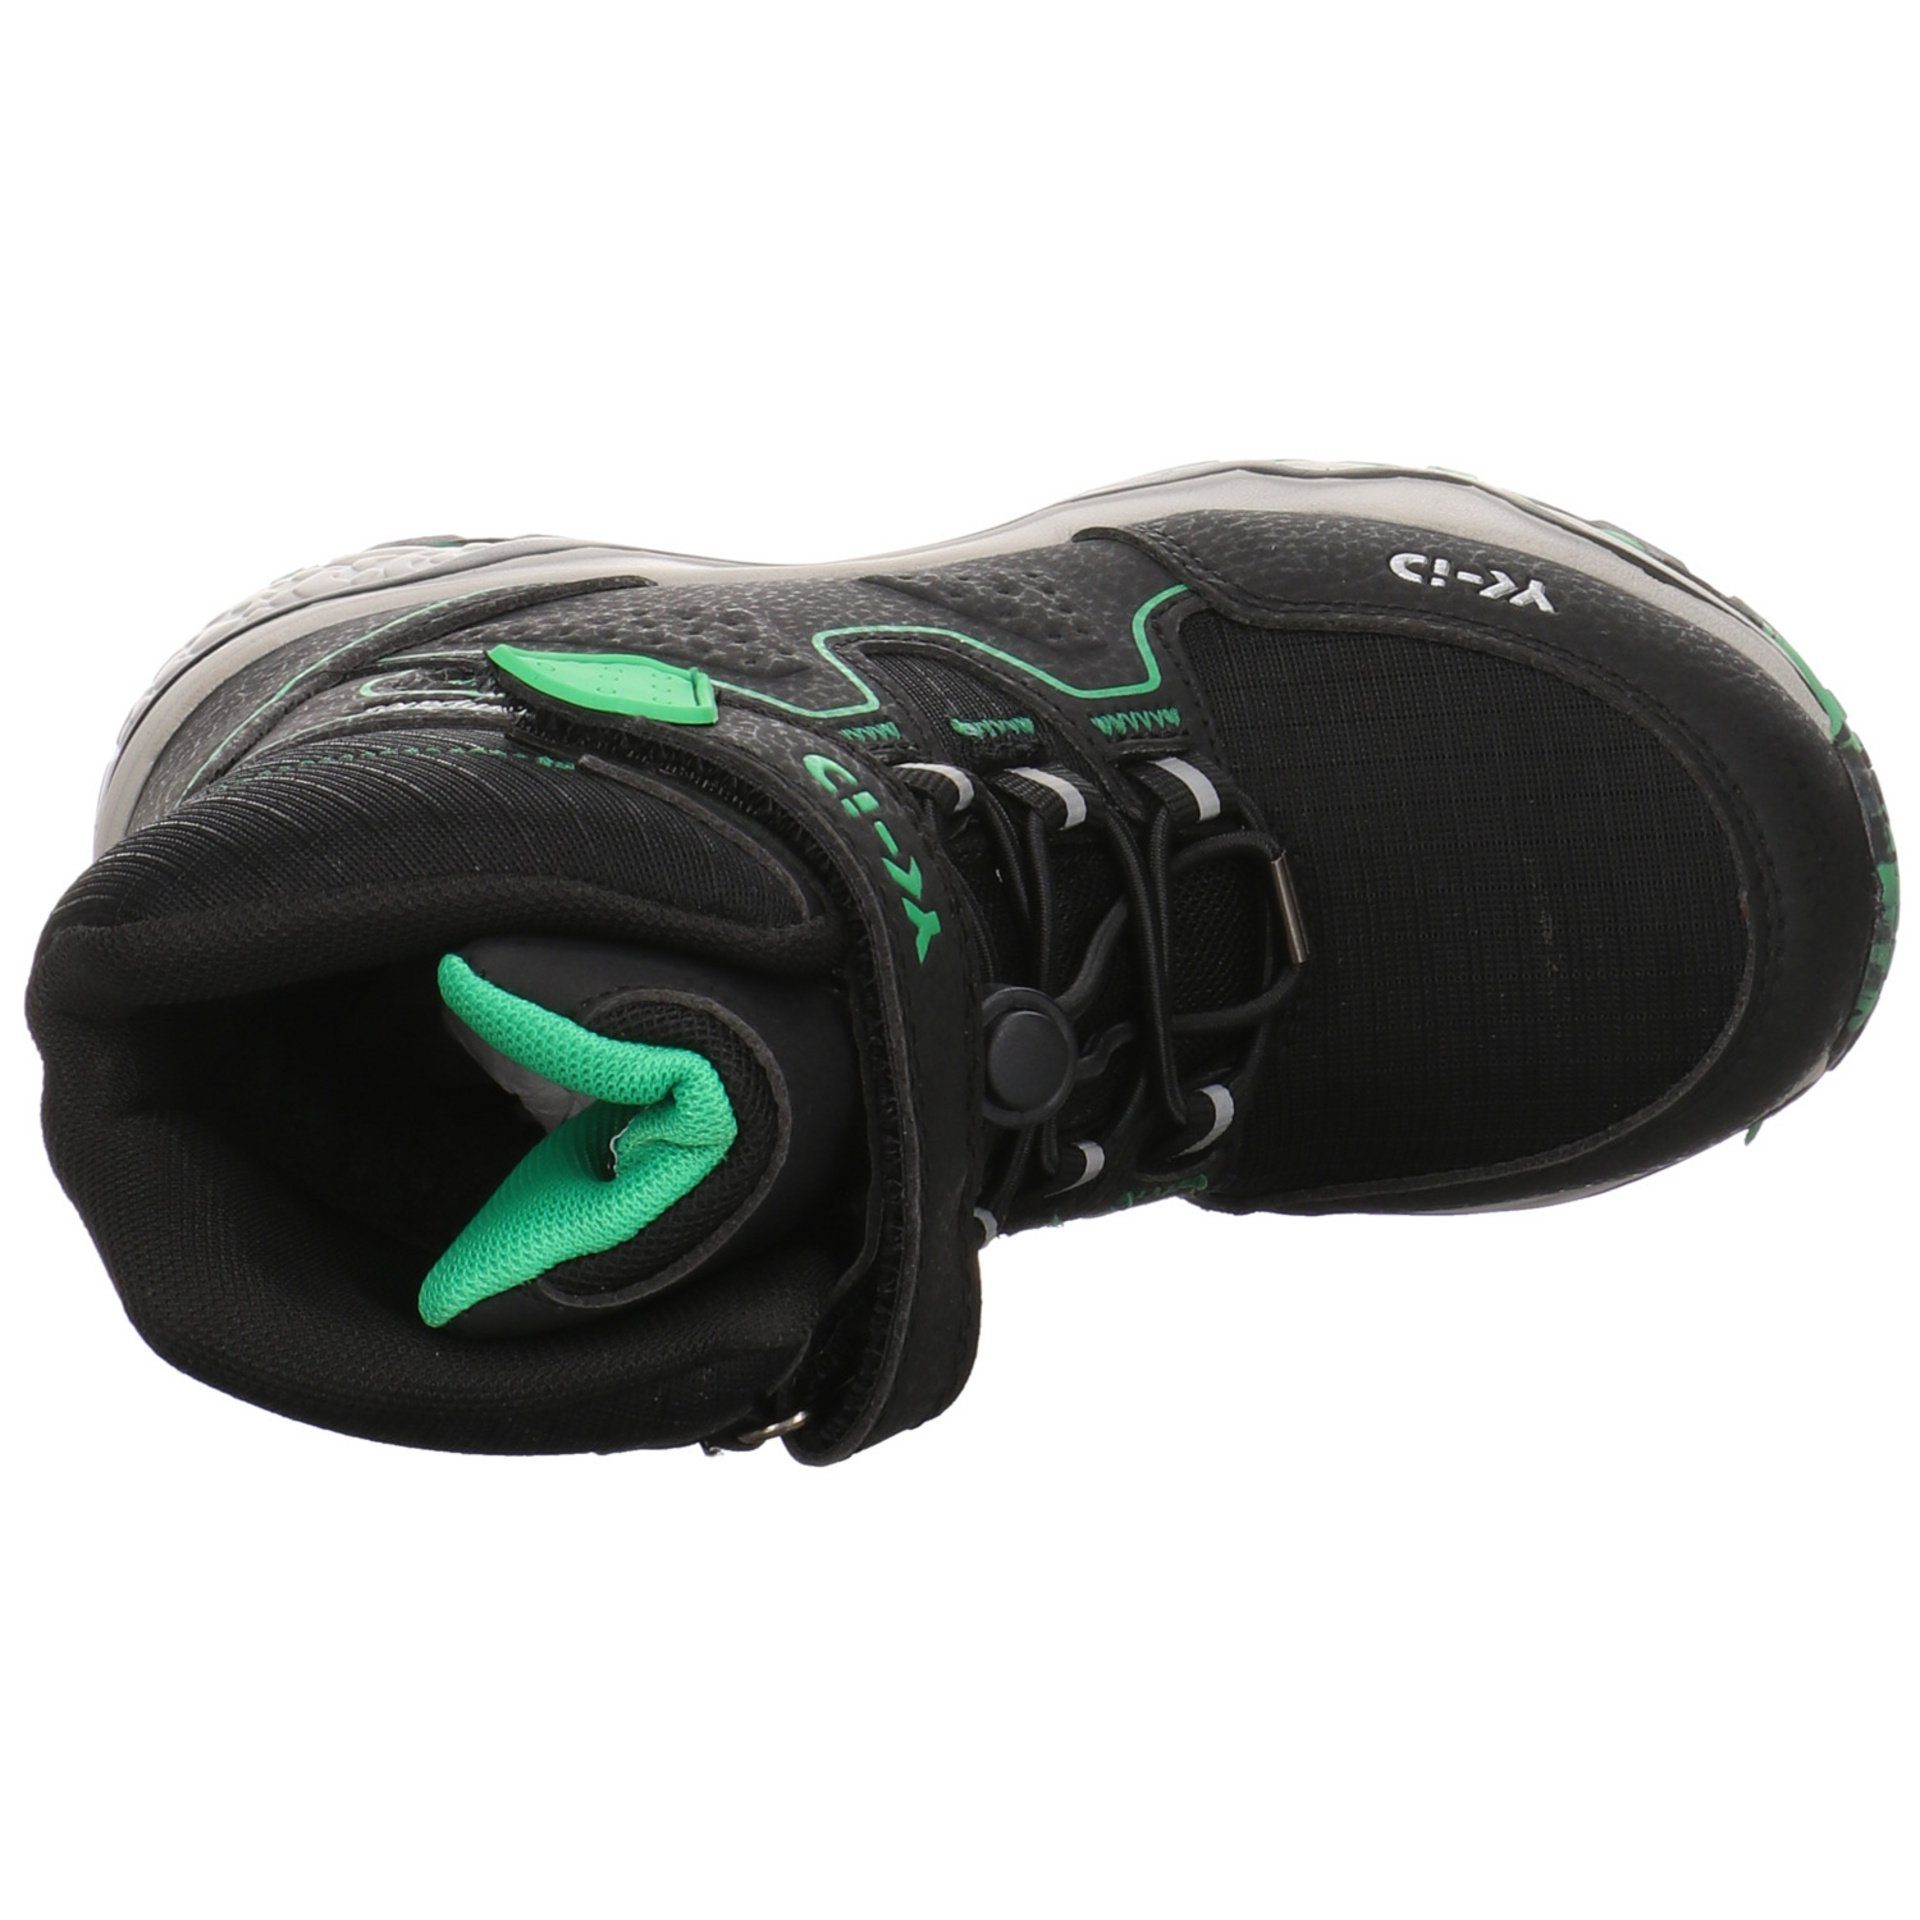 YK-ID Lucian-Tex Boots Stiefel by Jungen black Schuhe Lurchi green Stiefel Synthetikkombination